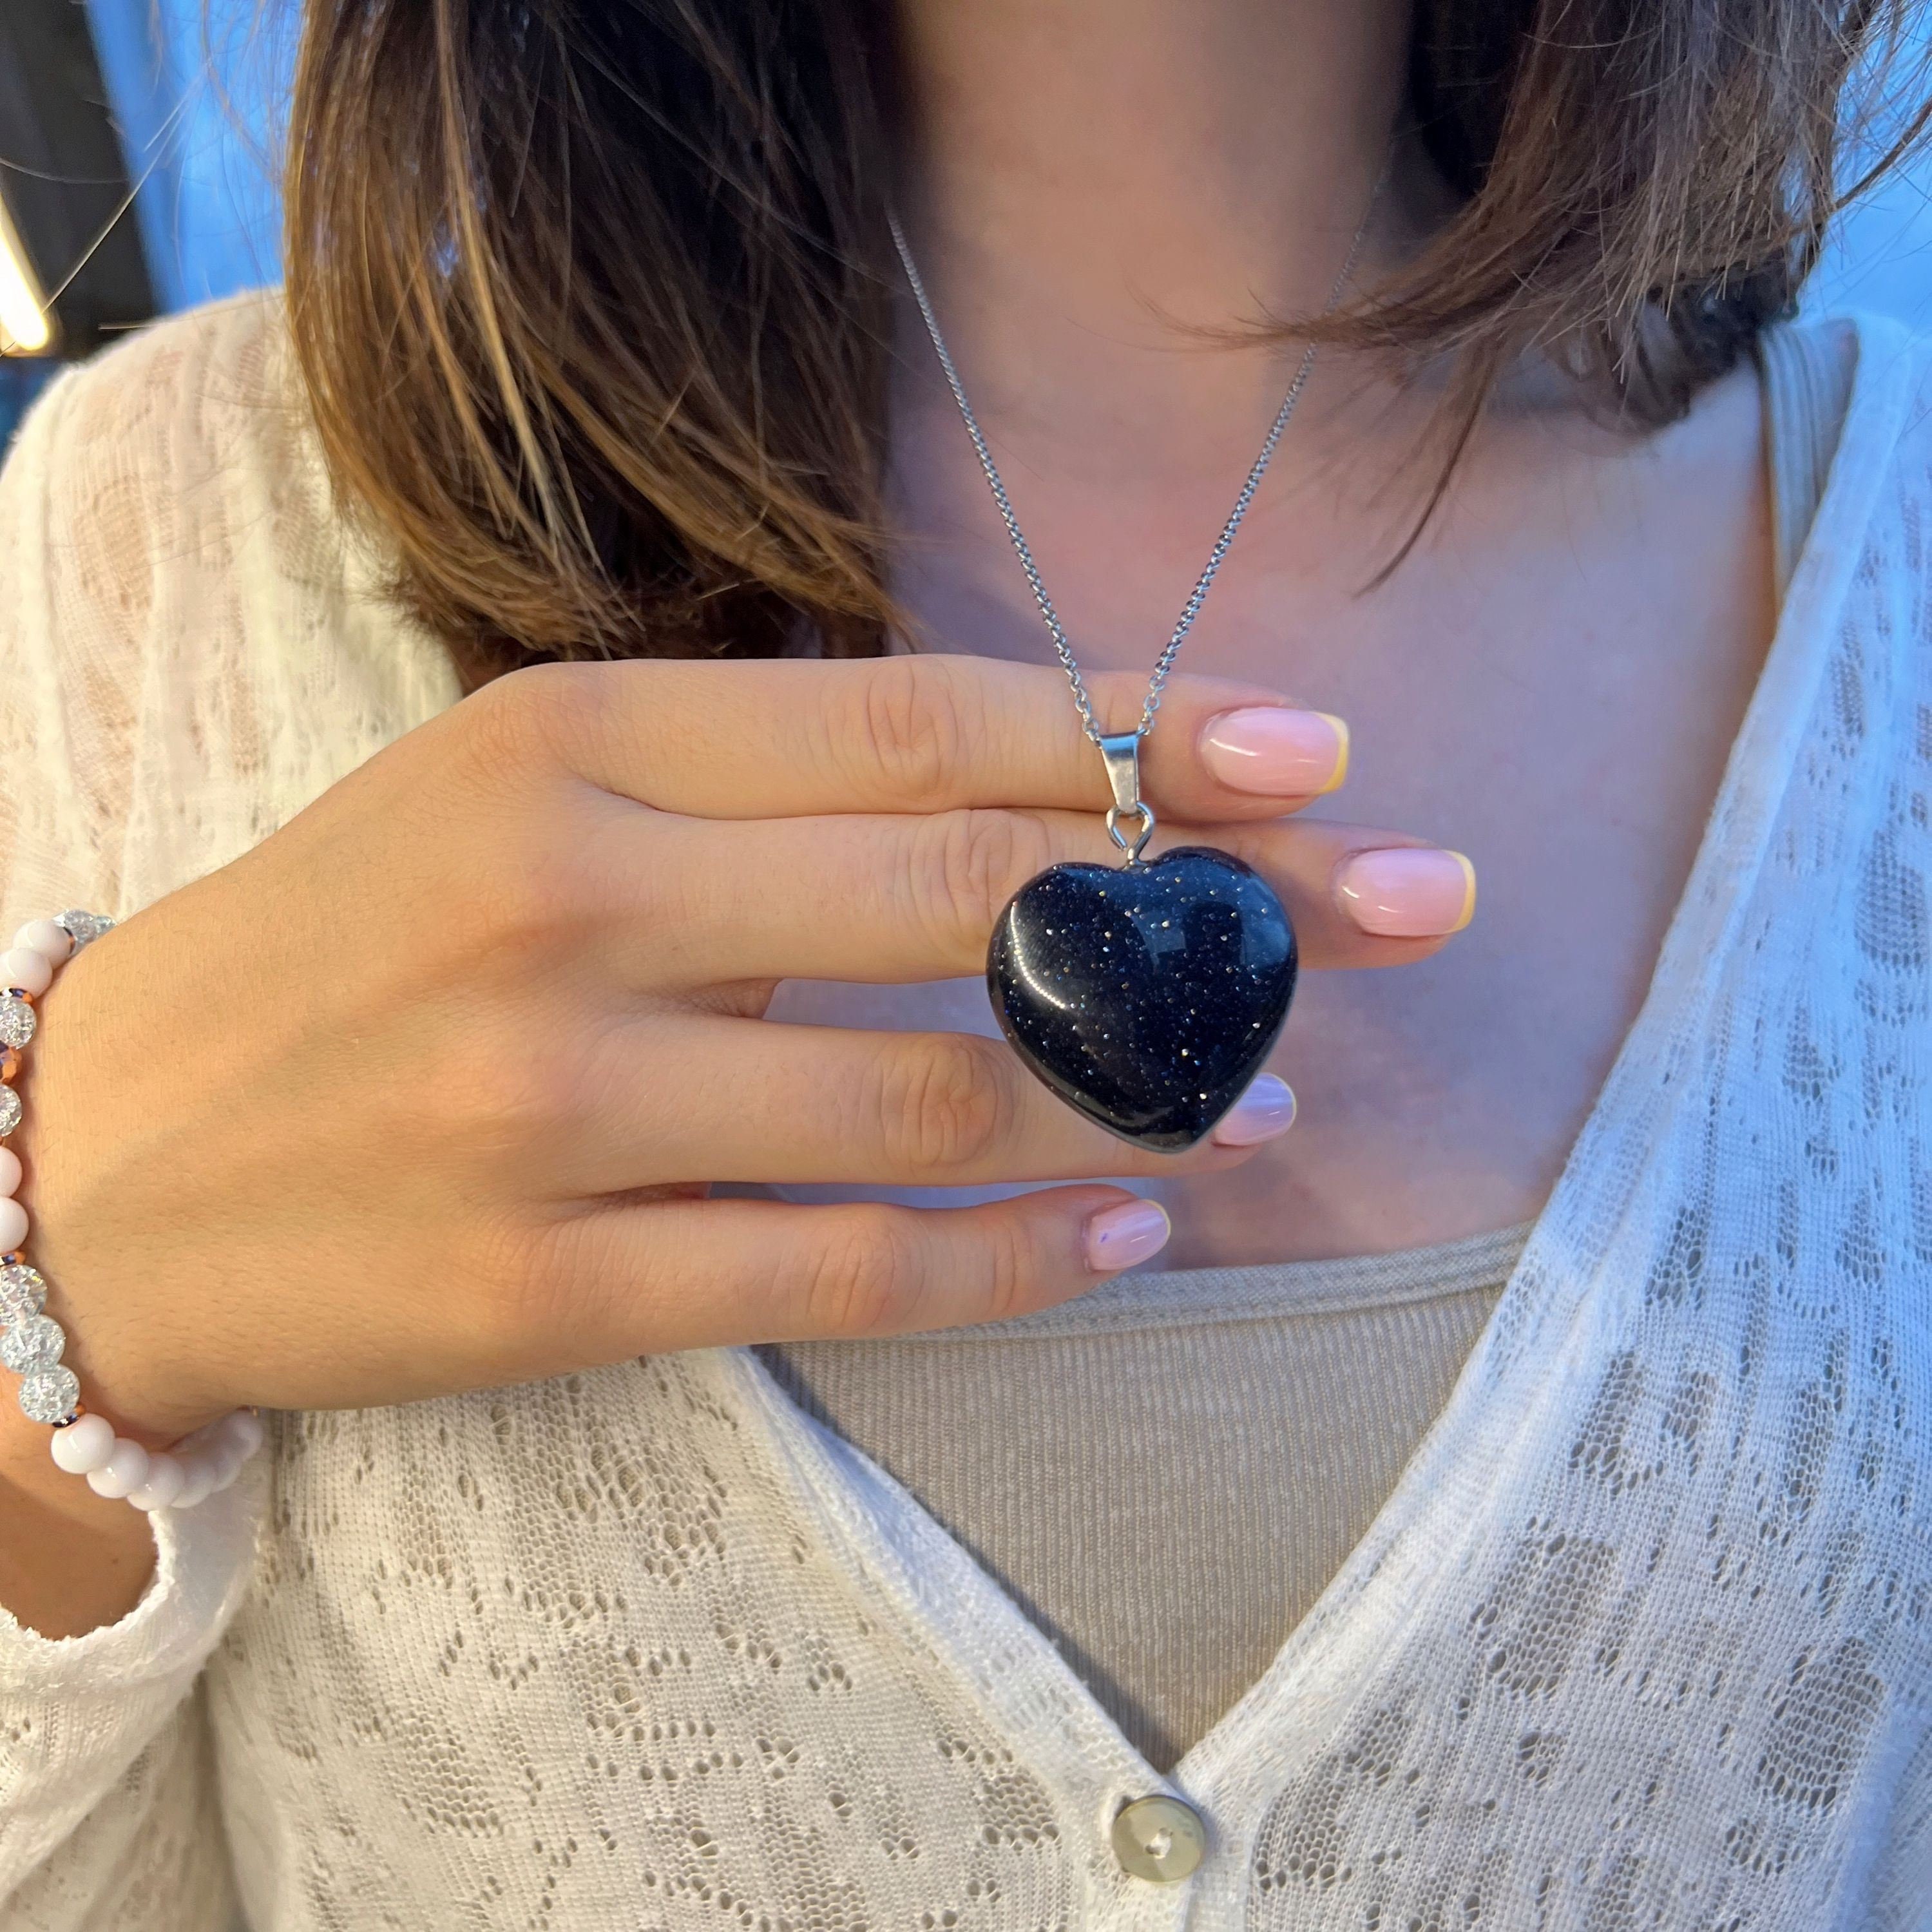 Blue Gold Sandstone Heart Shaped Healing Gemstone for Ambition